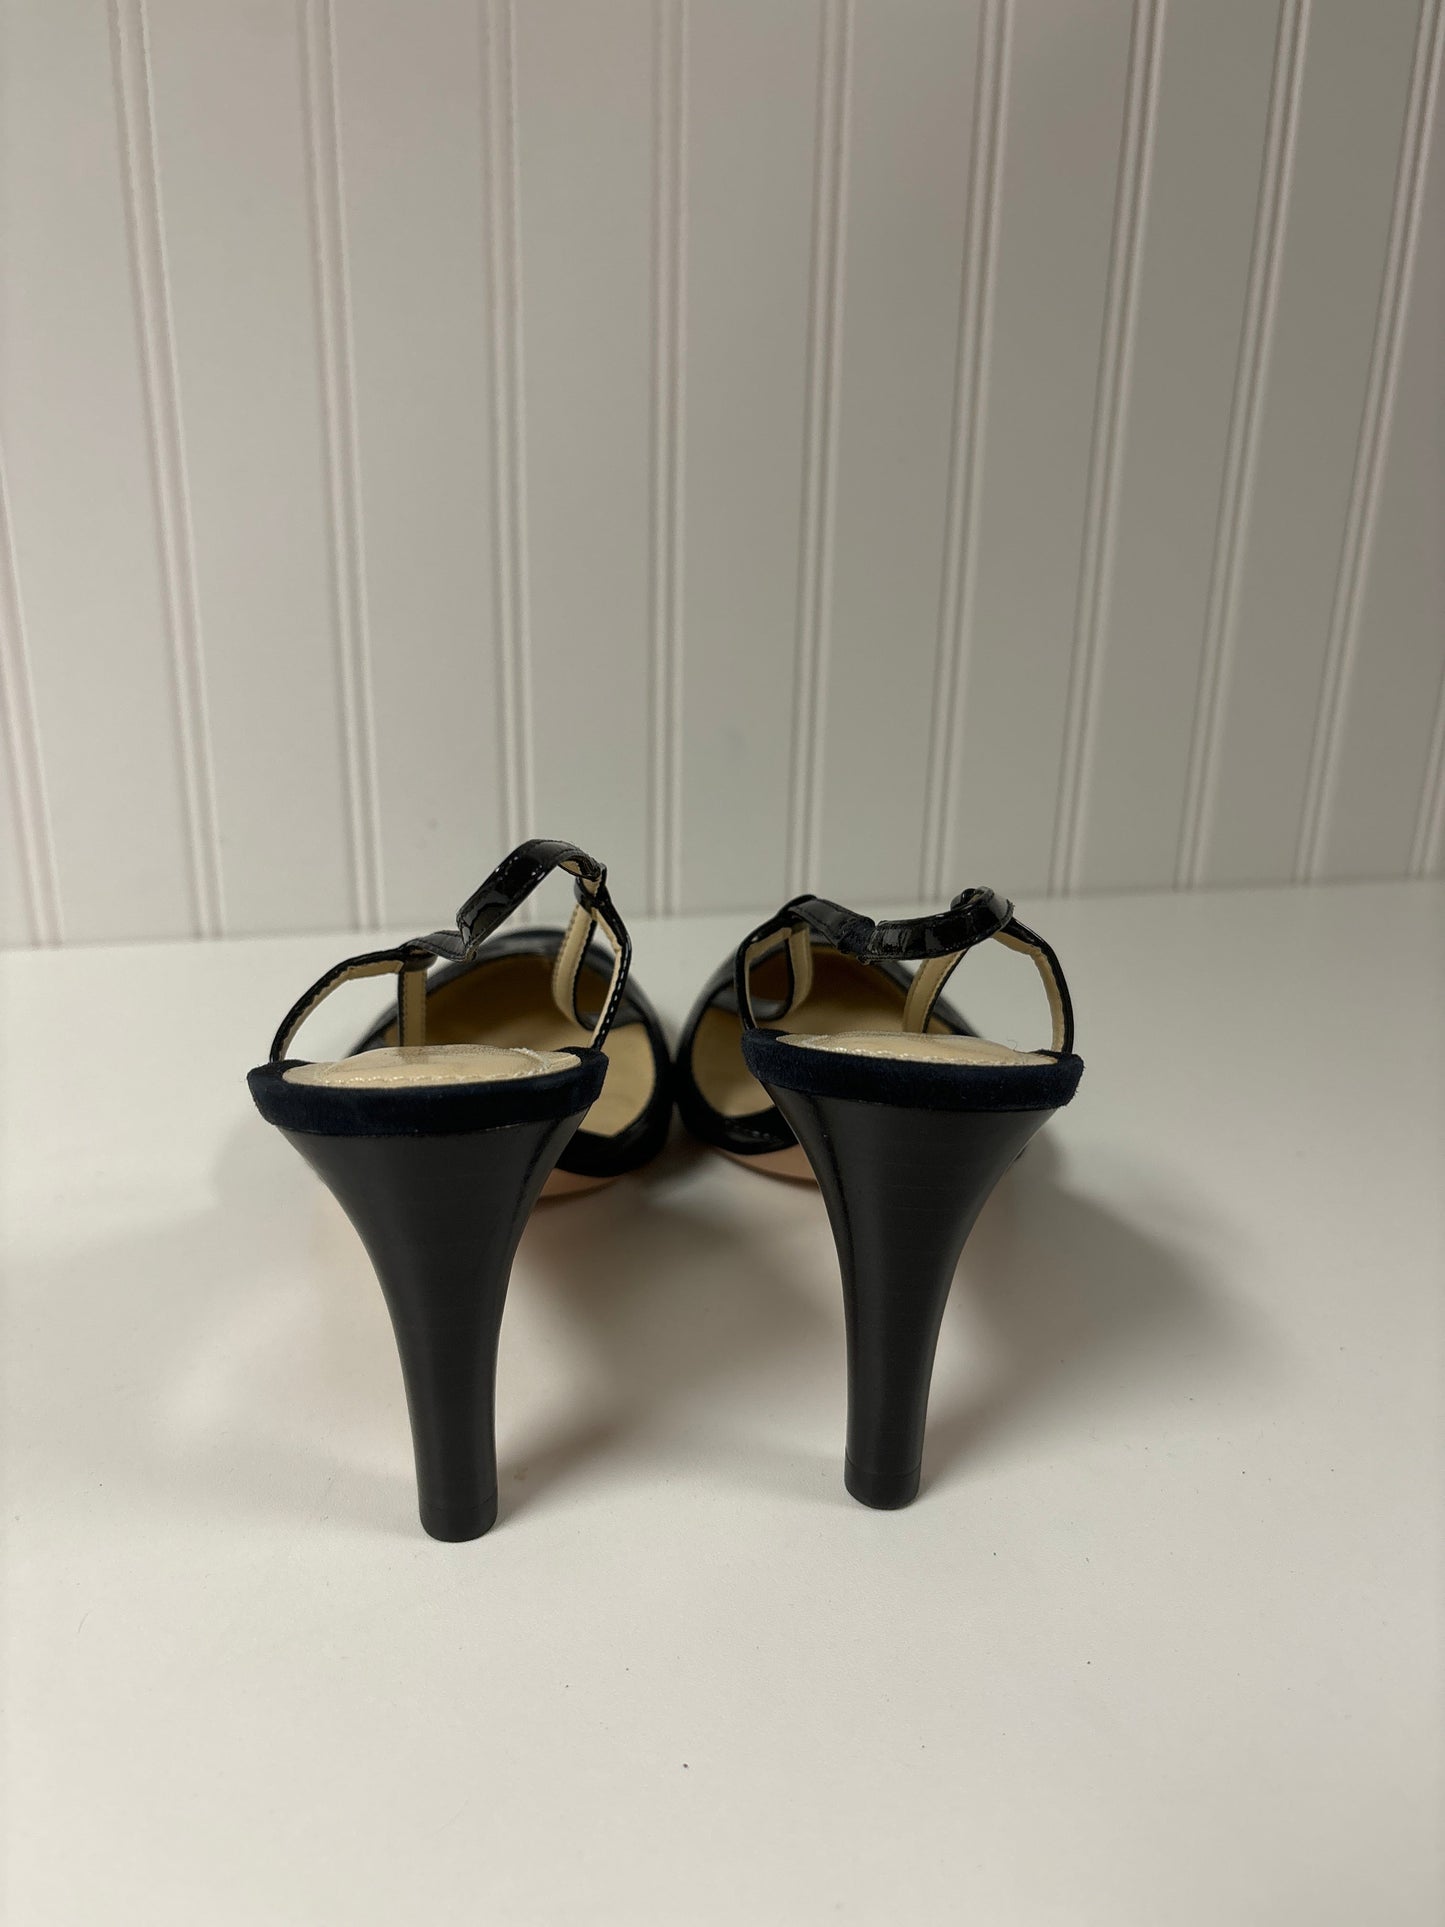 Black Shoes Heels Stiletto Ann Taylor, Size 6.5